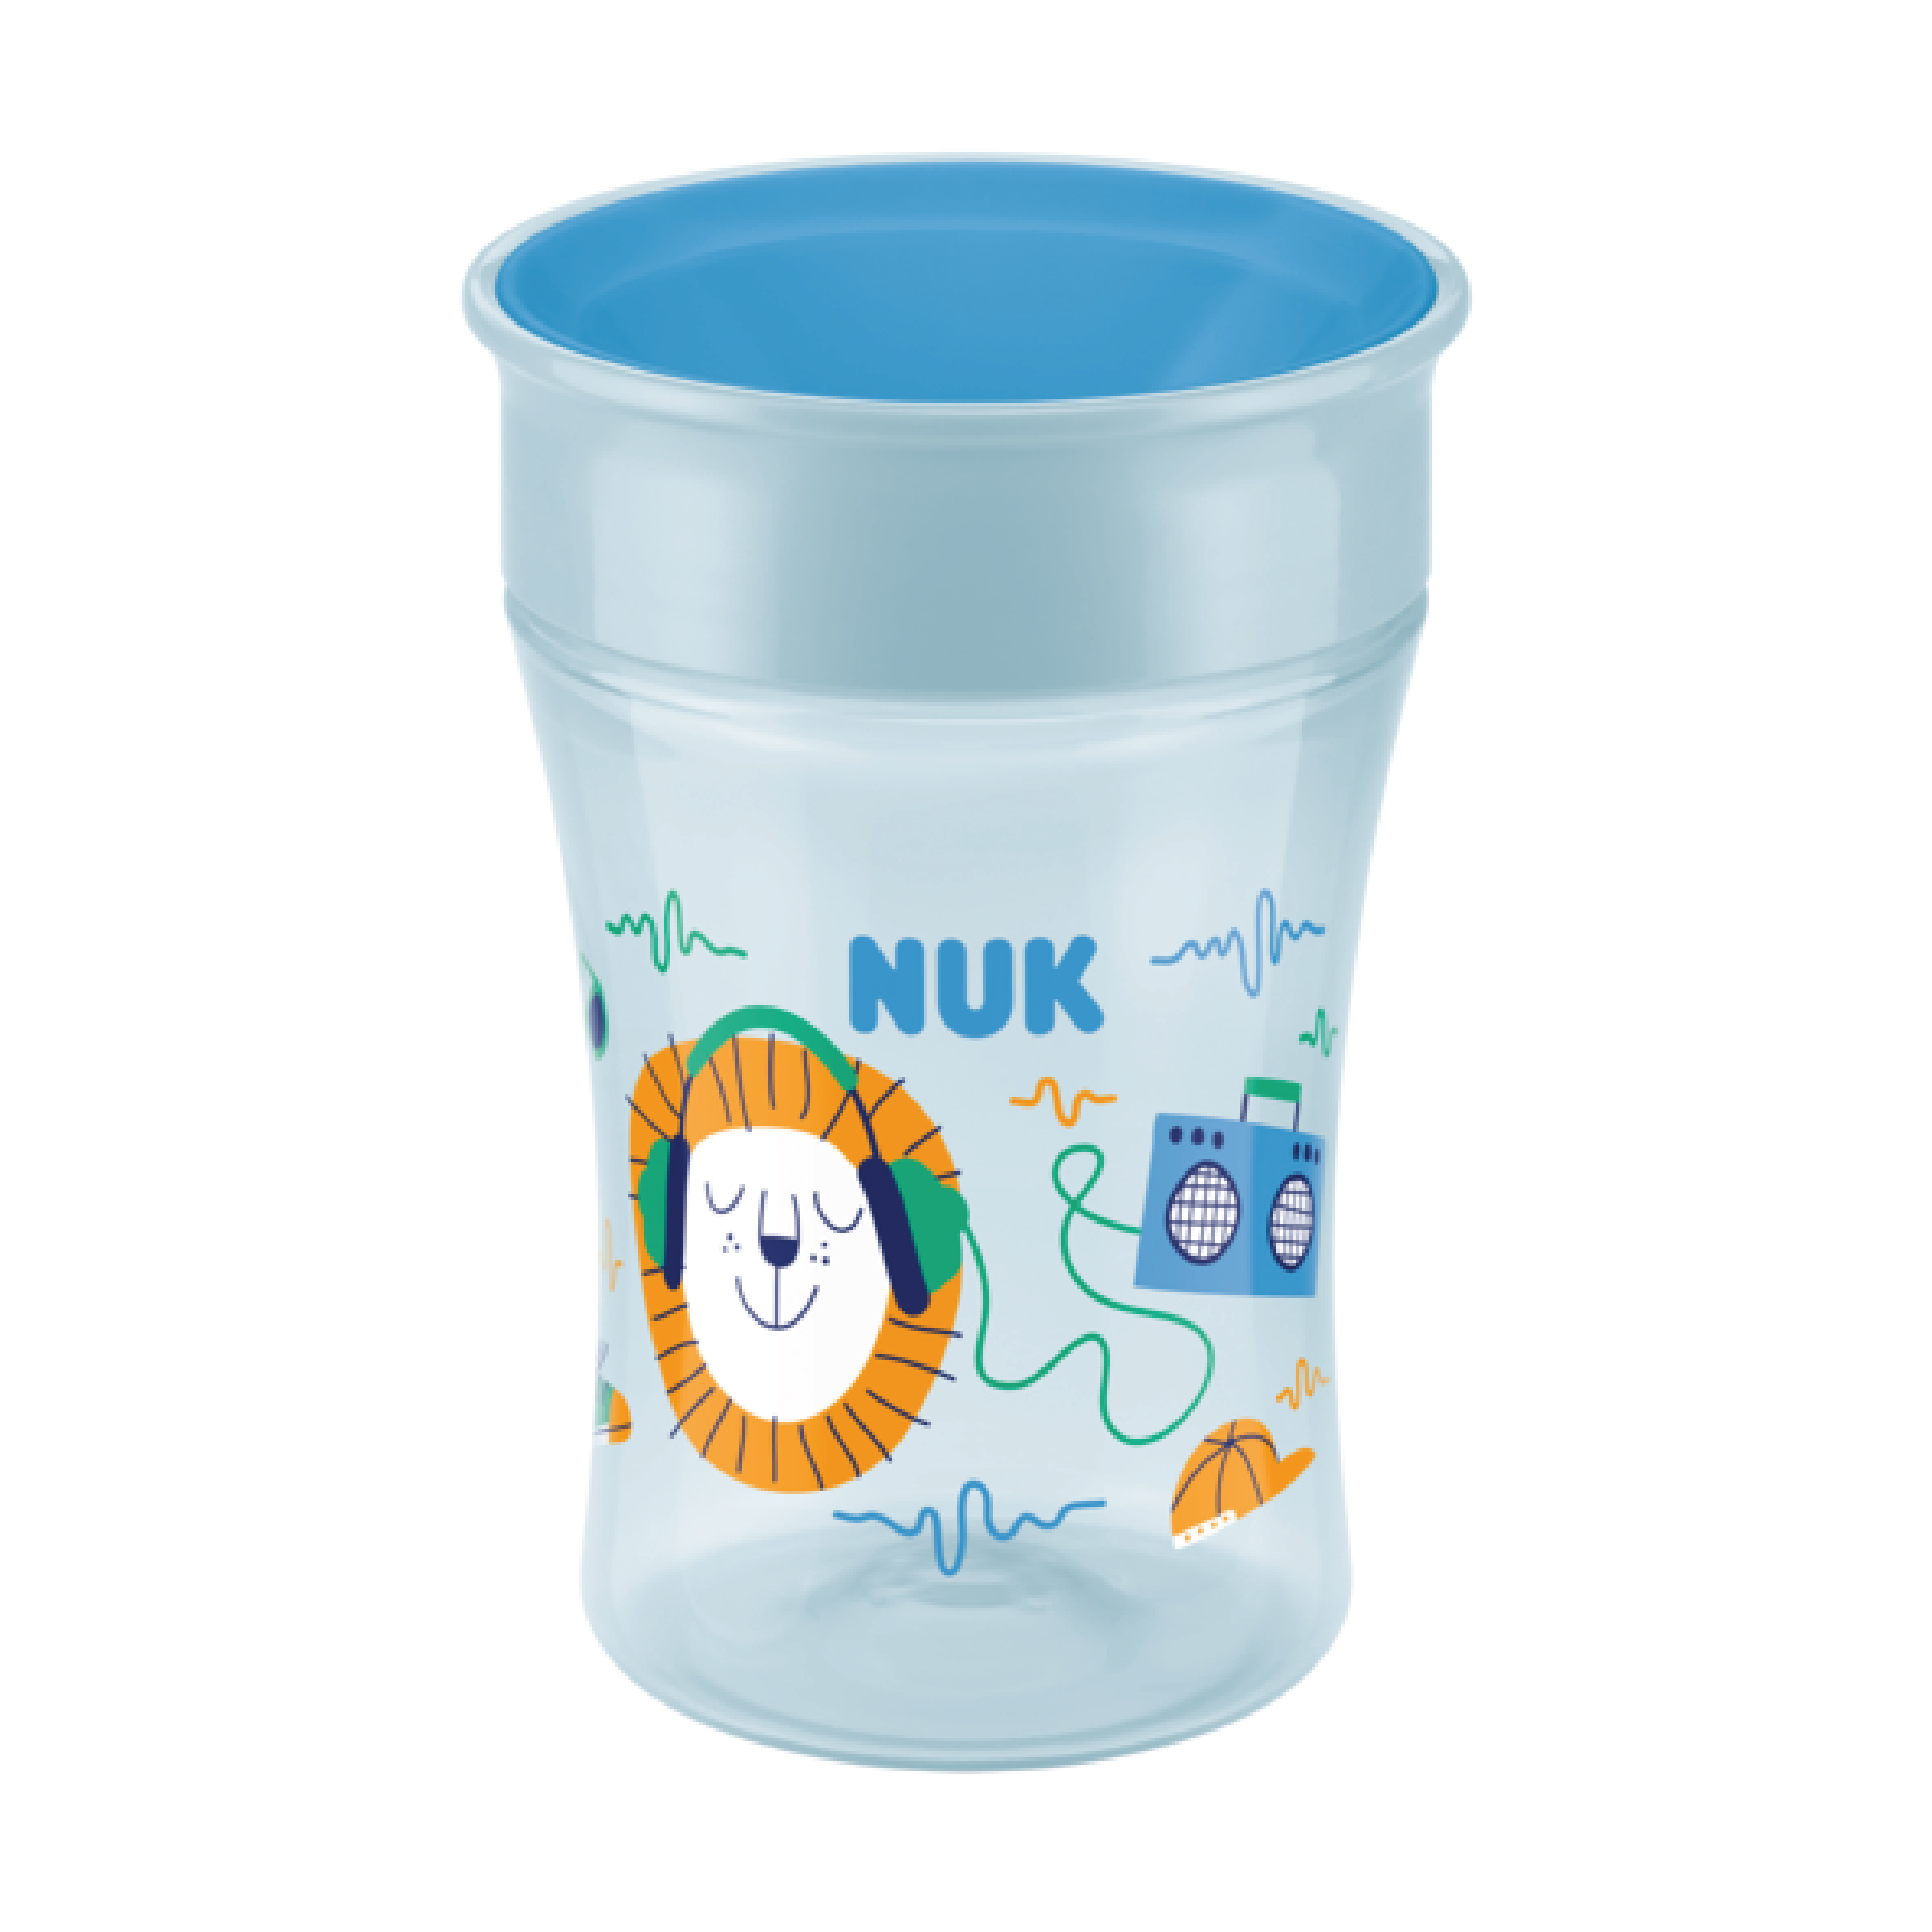 NUK Evolution Magic Cup, 8 mnd+, blå, 230 ml